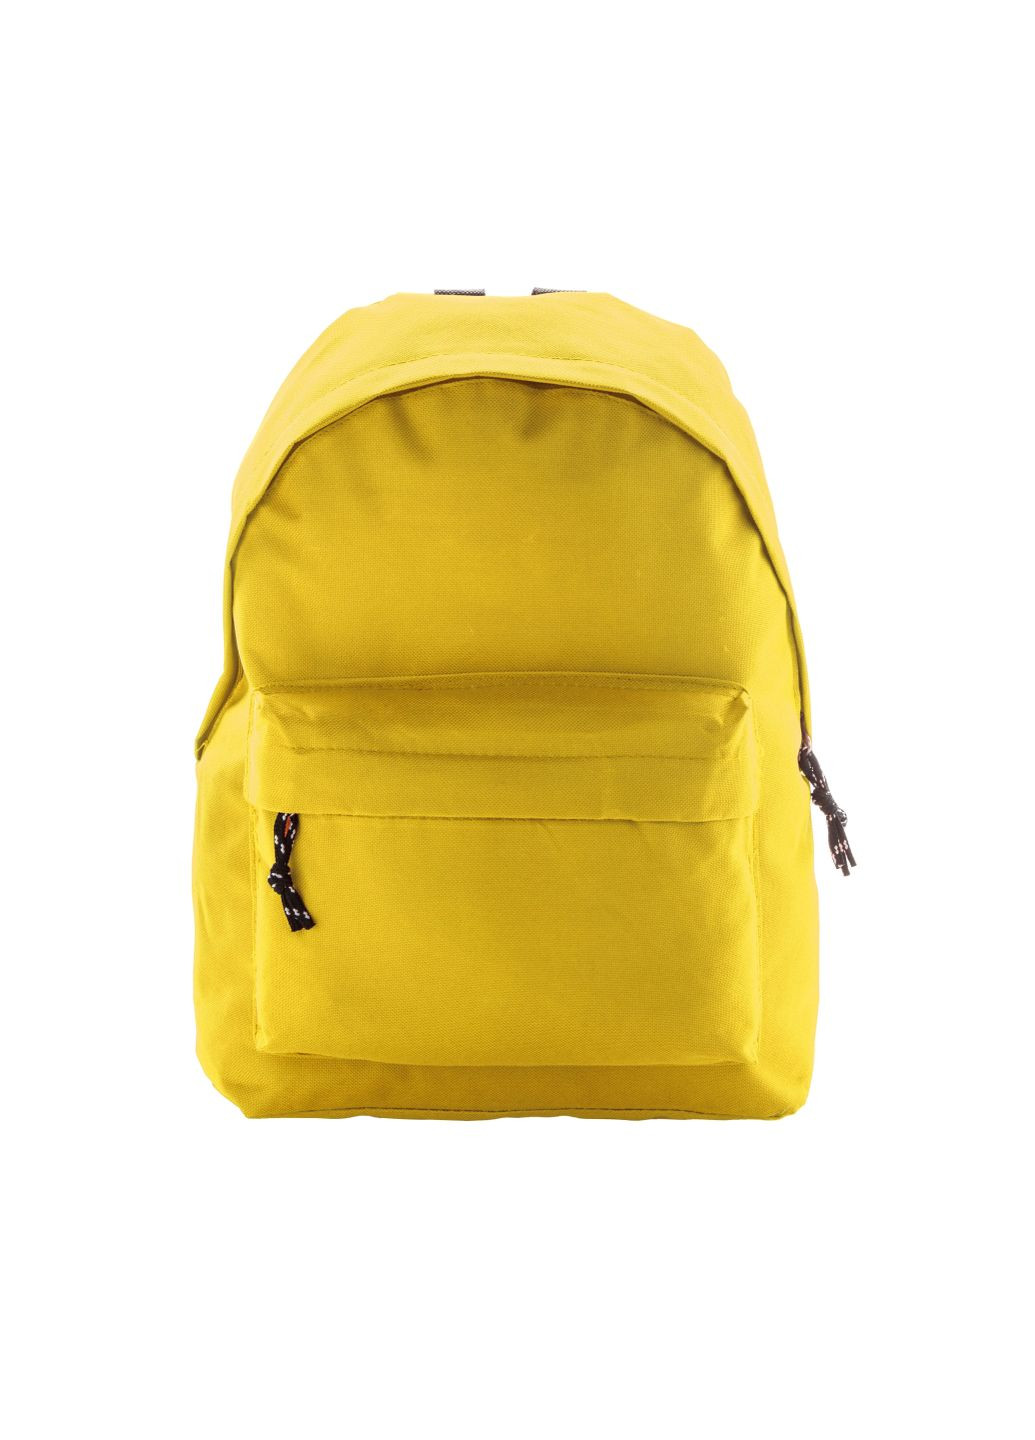 Рюкзак желтый 3009-02 Discover compact (292314847)